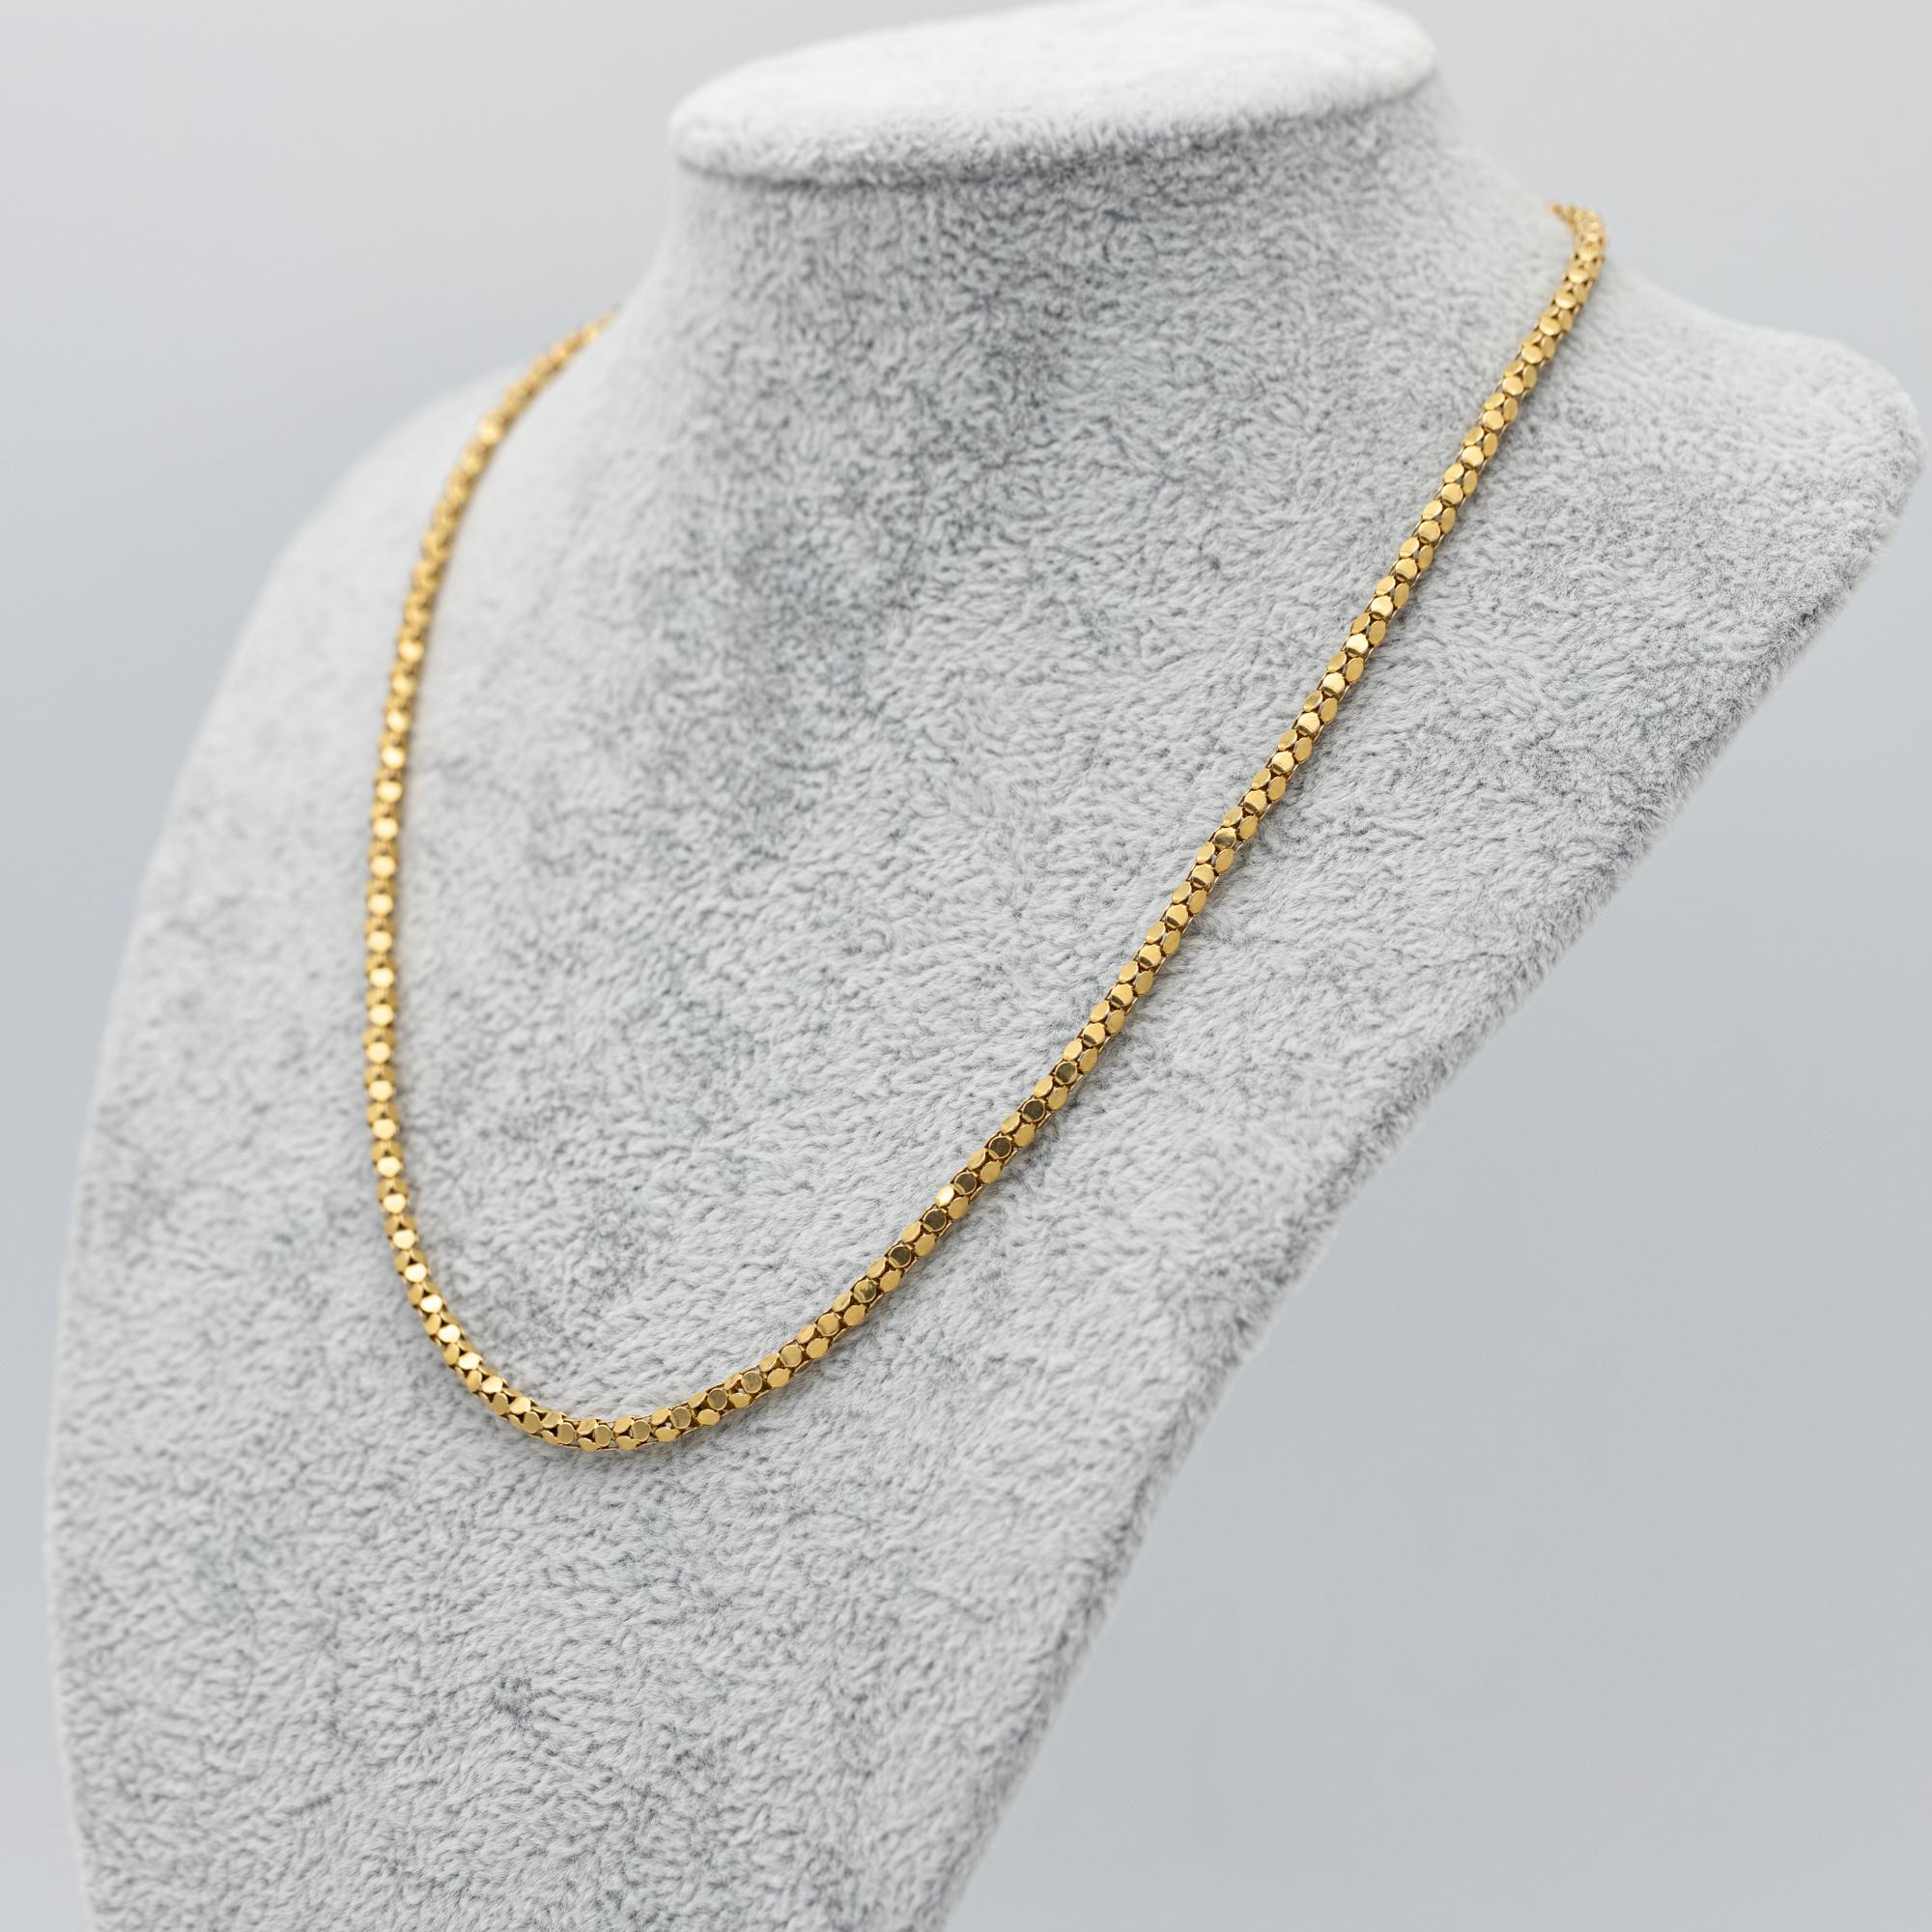 18k solid gold Retro popcorn chain - 1960's necklace - 44.5 cm - 17.25 inch 3